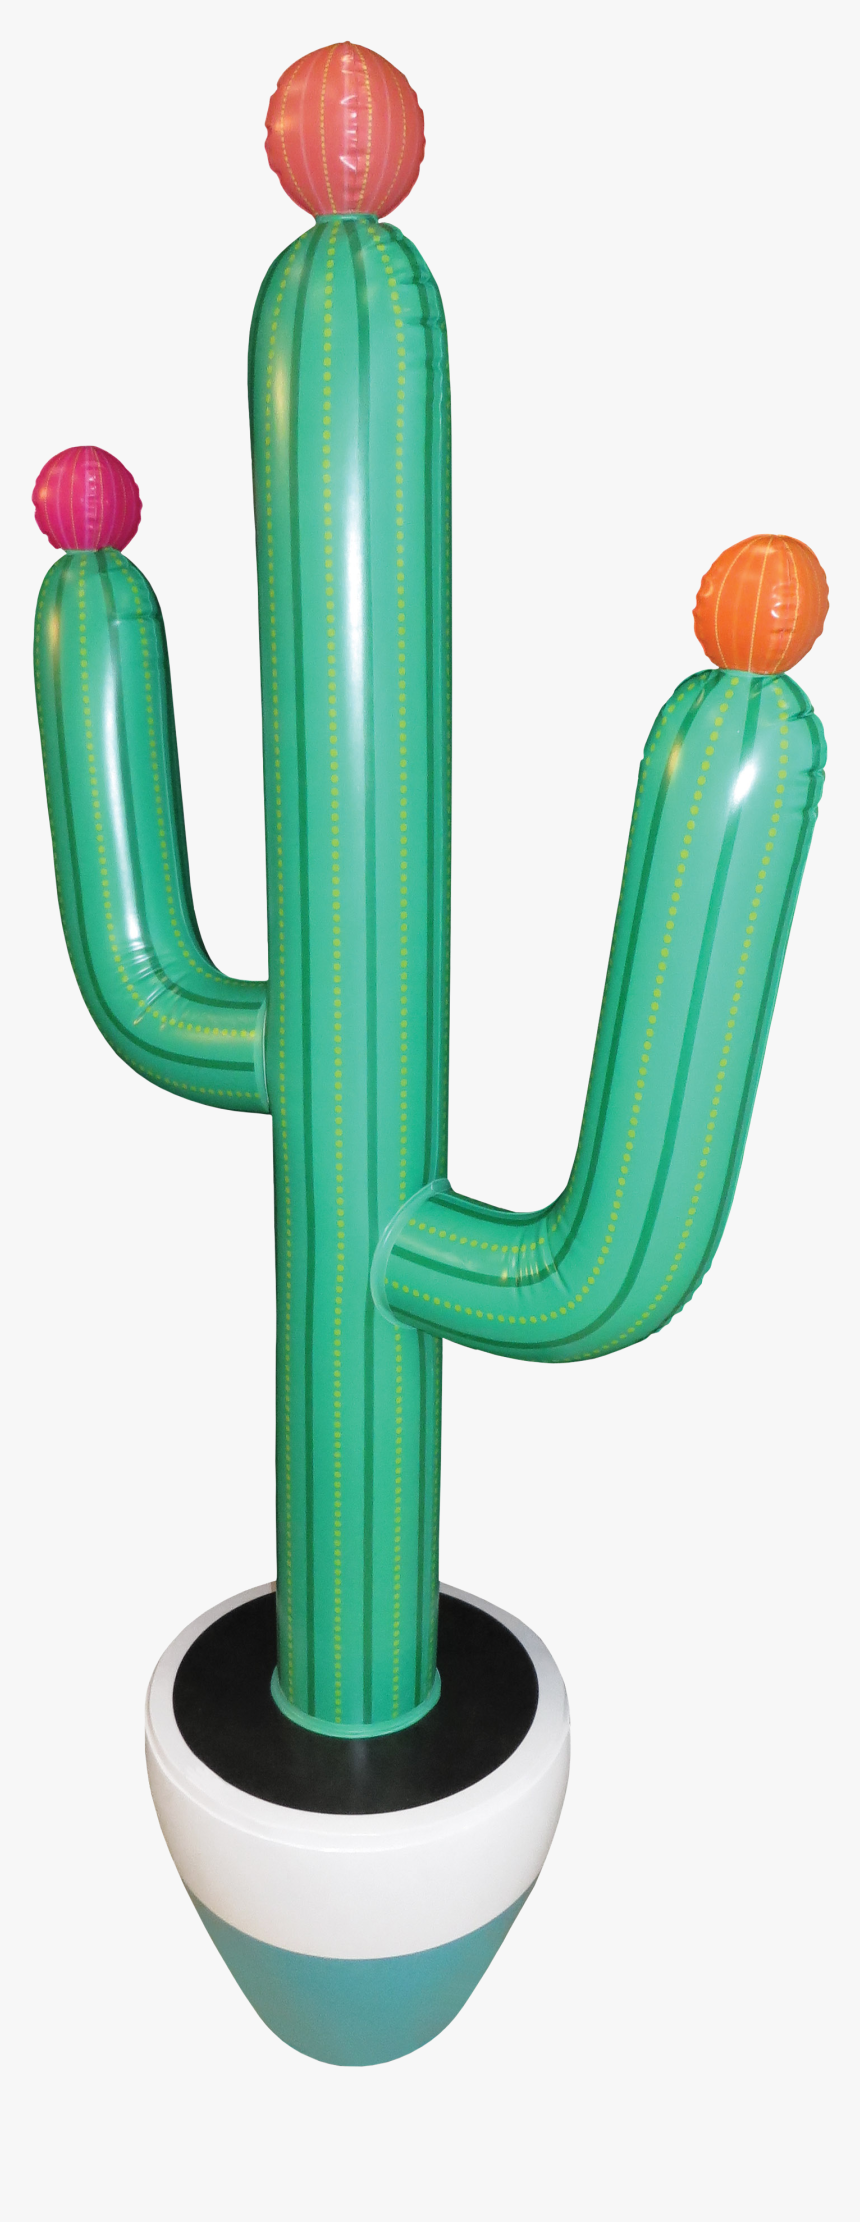 Inflatable Cactus - 1 - 6m Tall - San Pedro Cactus - San Pedro Cactus, HD Png Download, Free Download